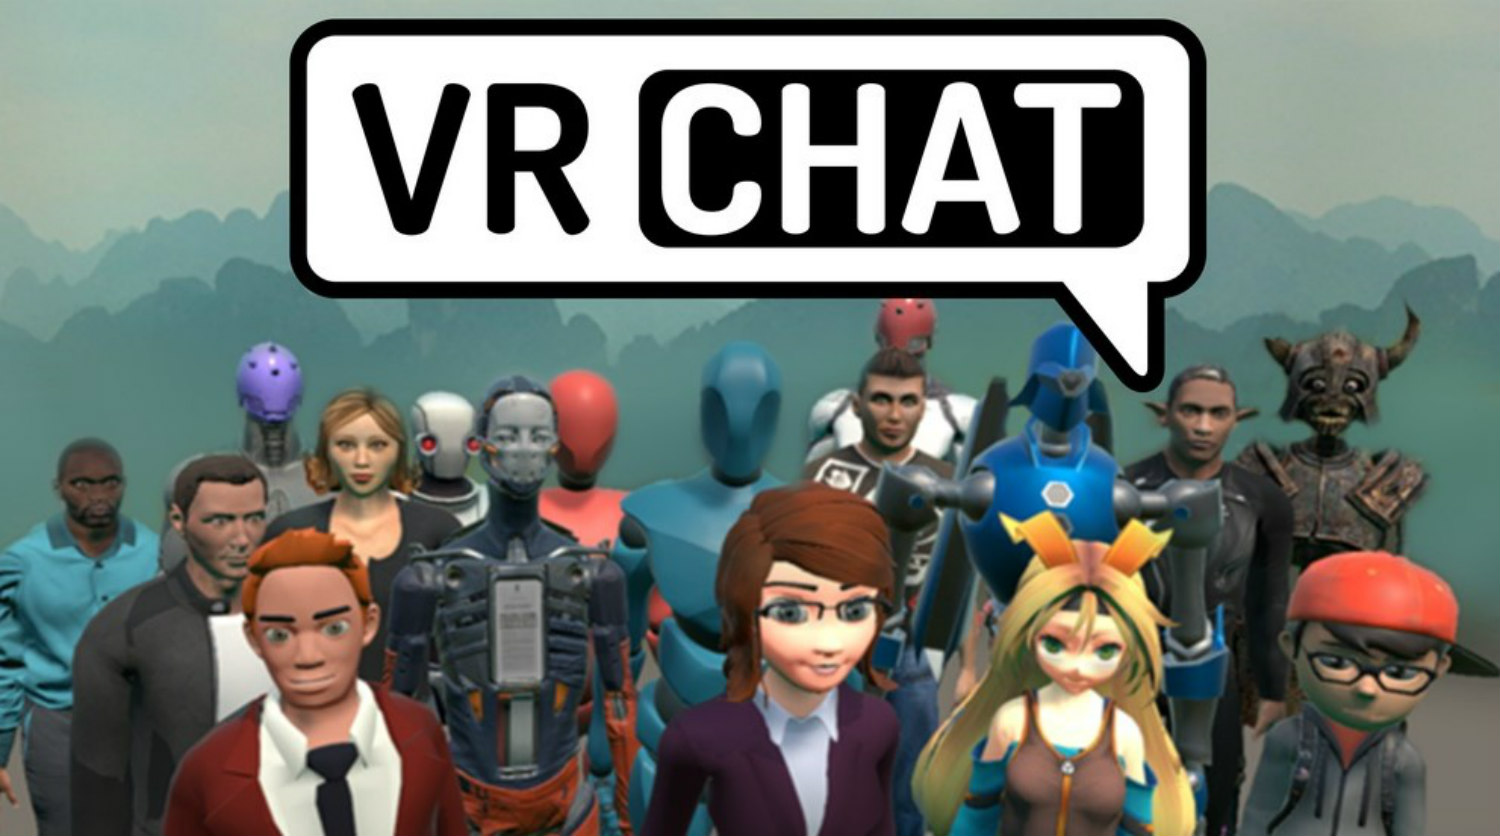 Social VR Platform VRChat Closes $10 Million Series C Investment